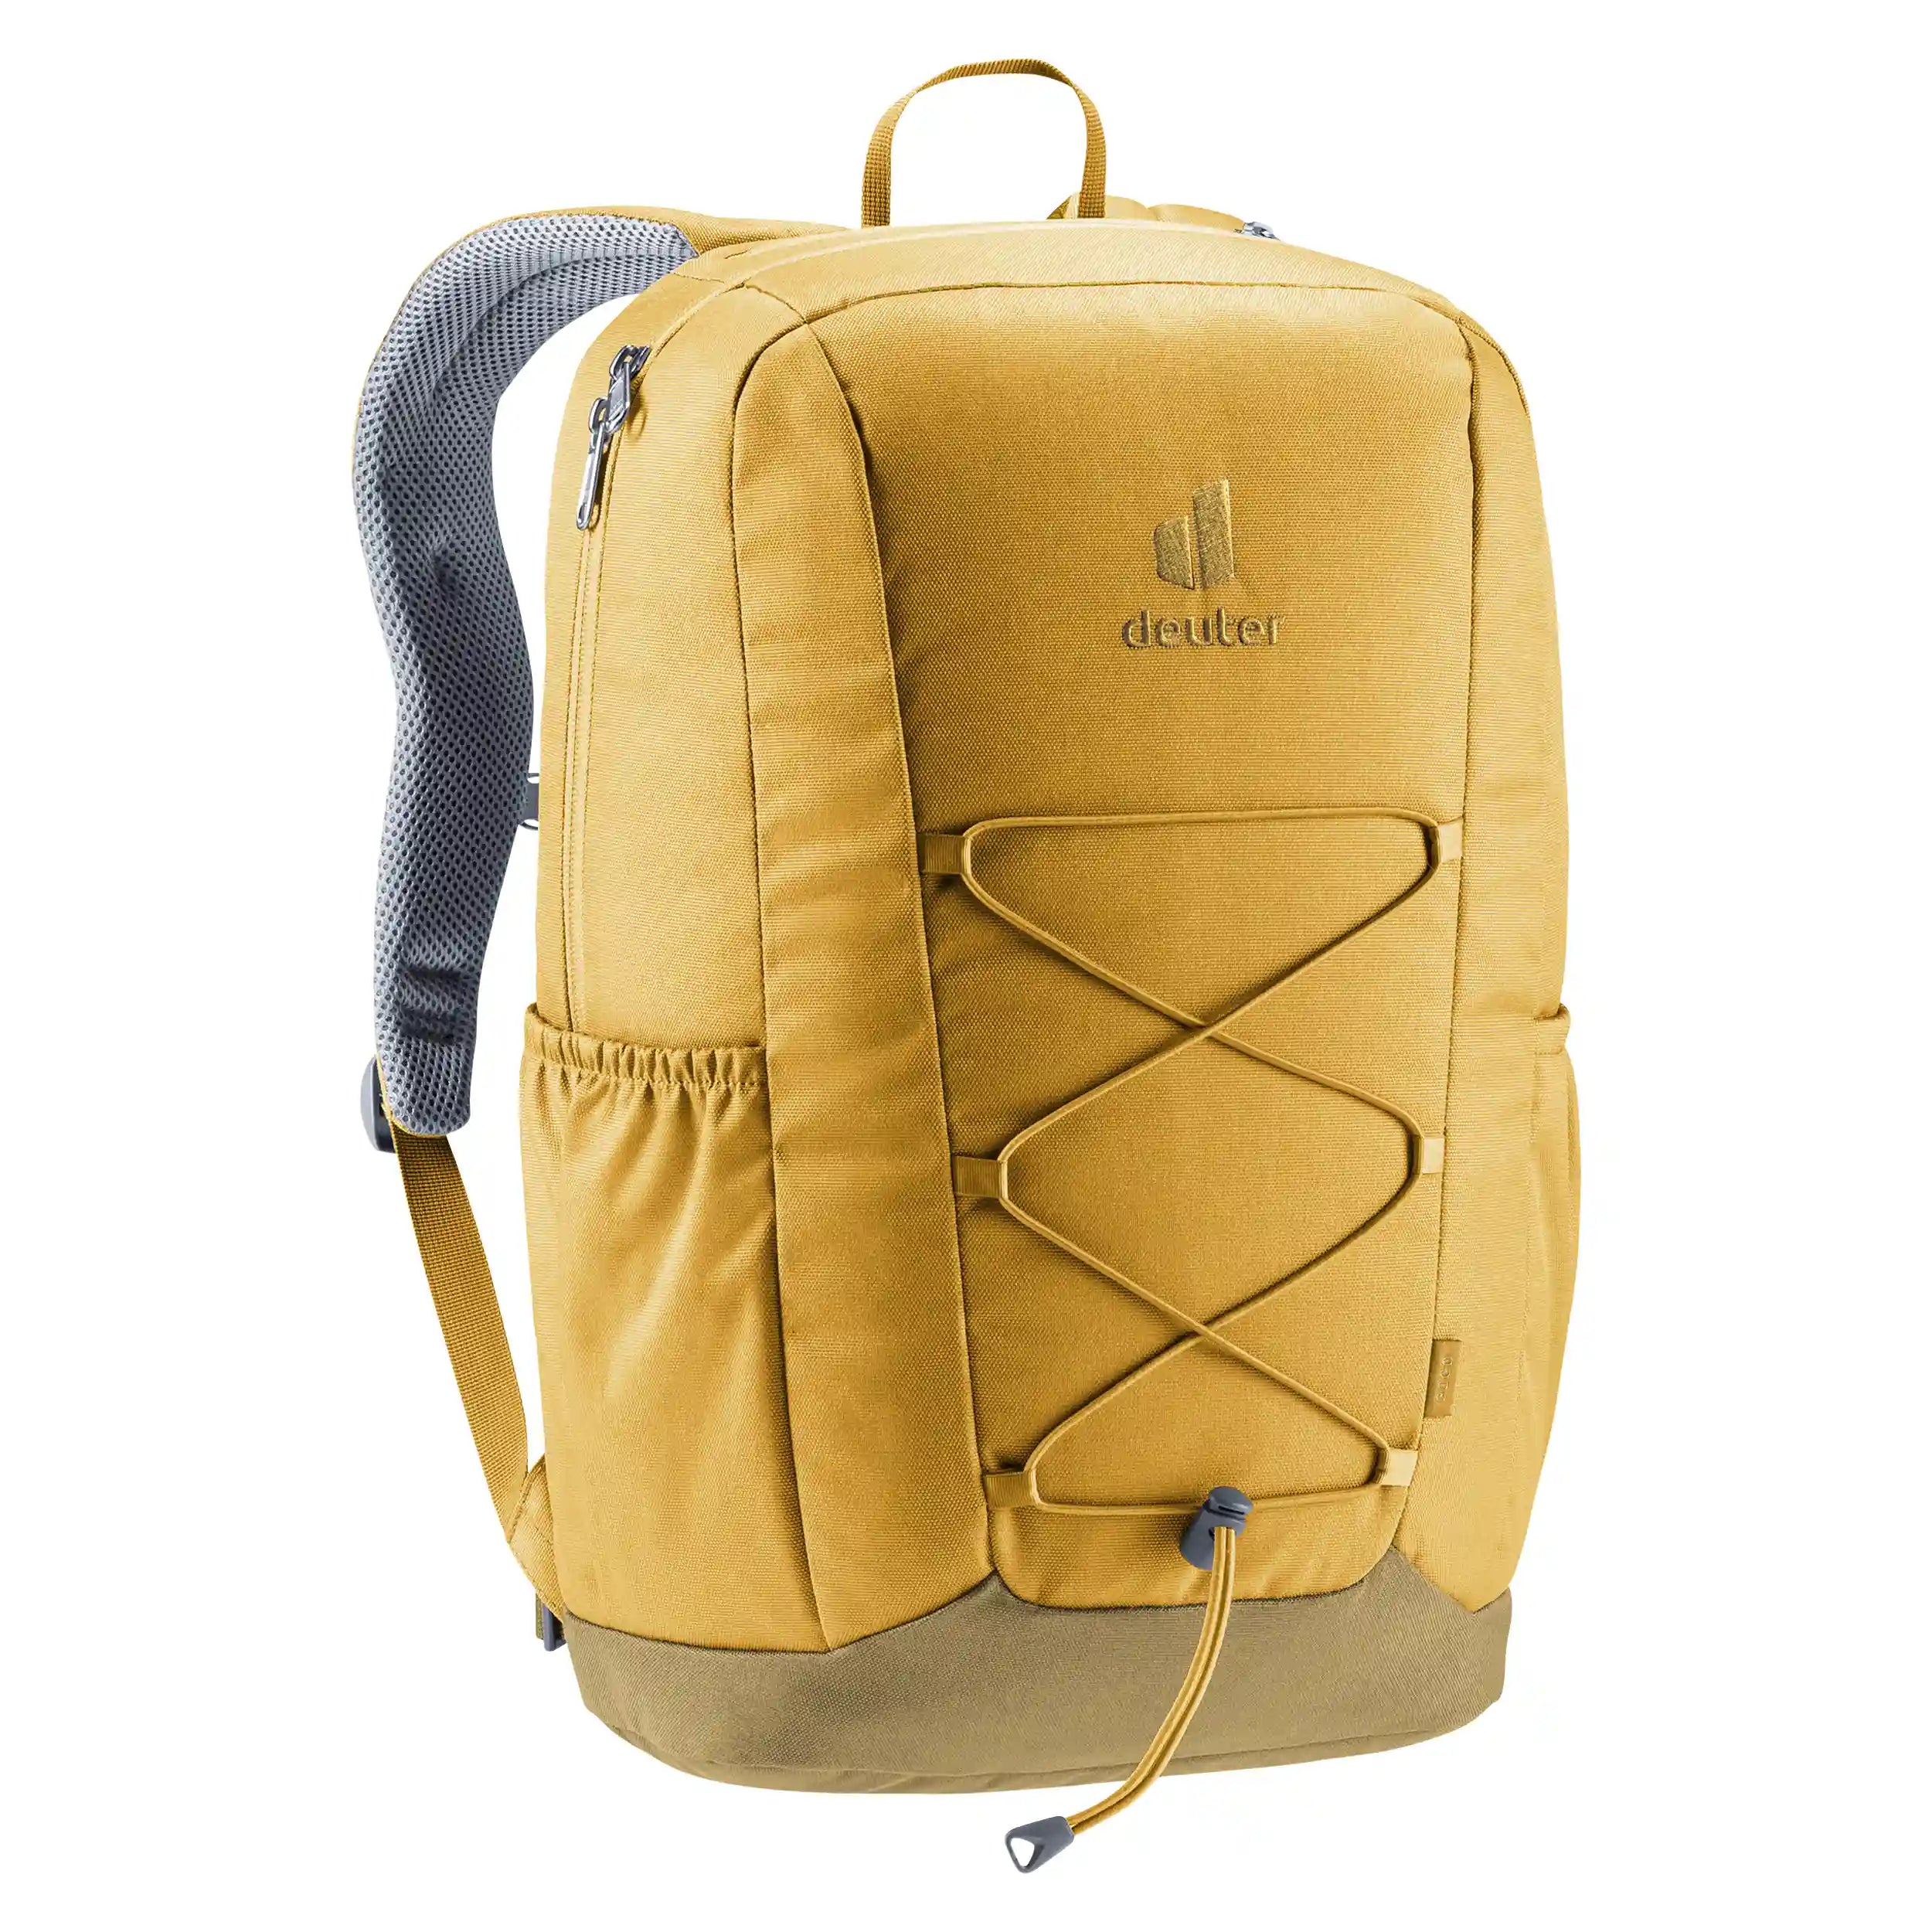 Deuter Gogo Lifestyle Backpack 46 cm - Caramel Clay